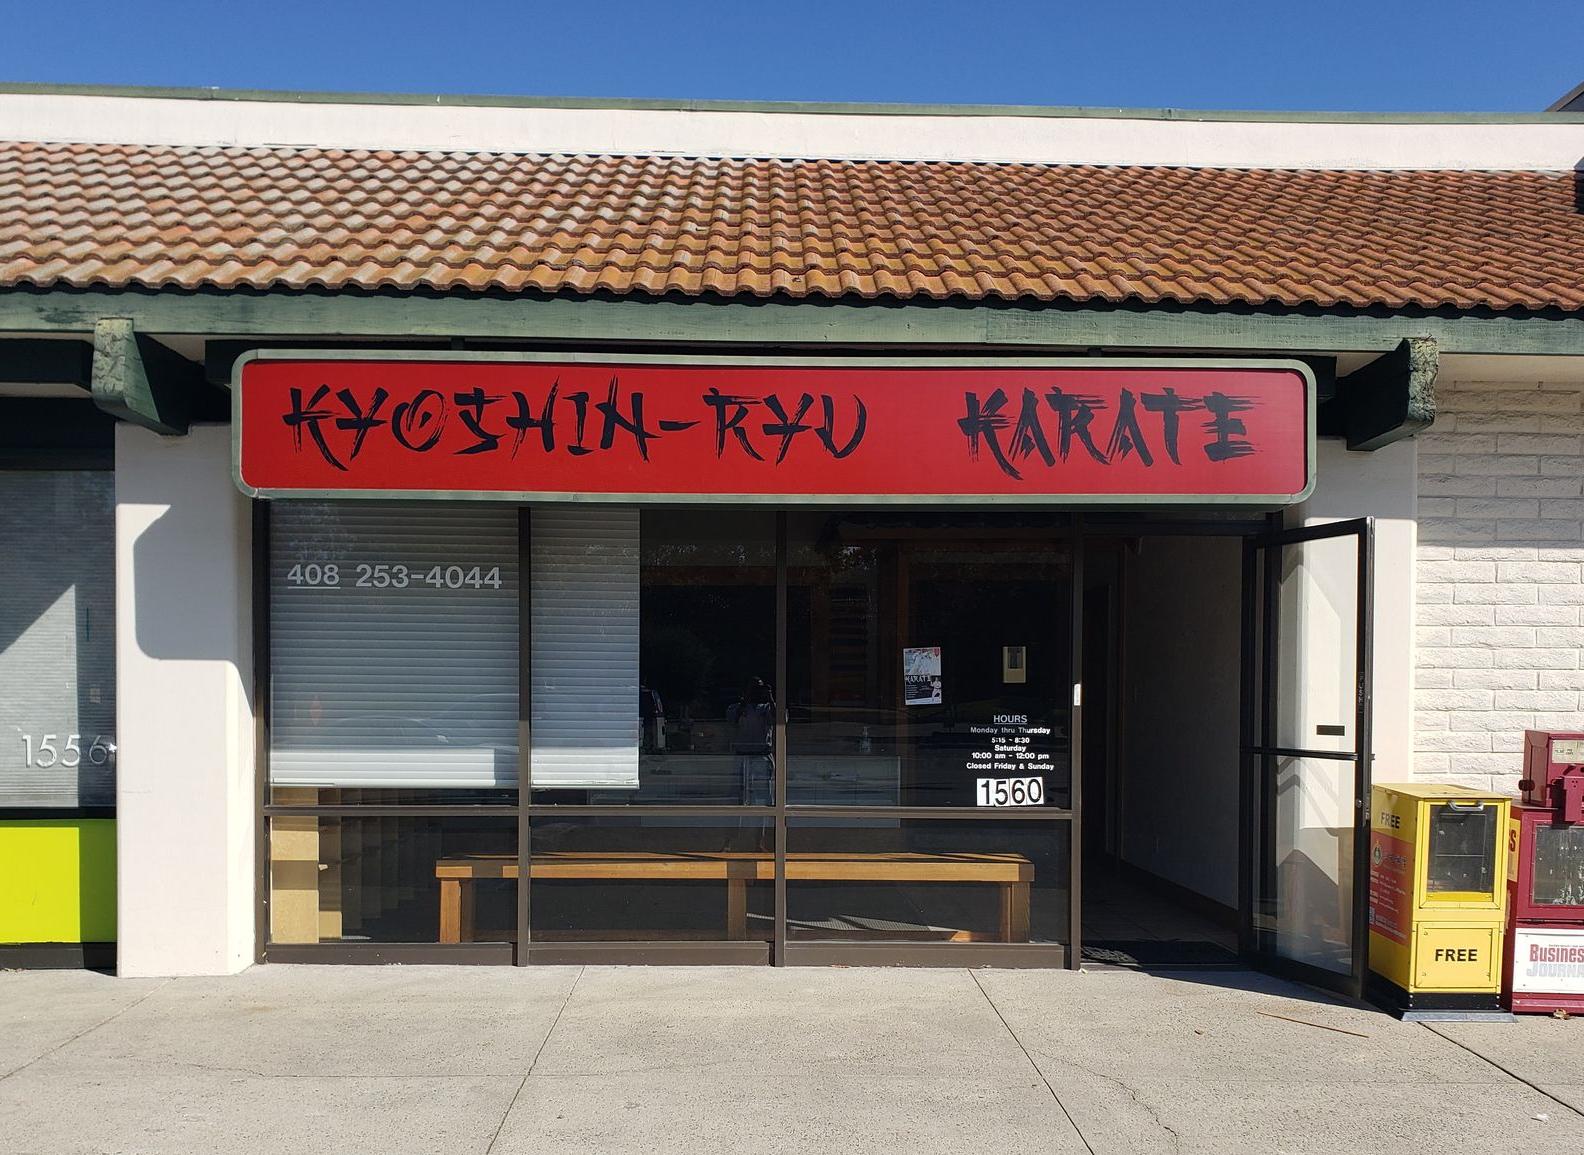 Street View of Kyoshin-Ryu Karate Dojo